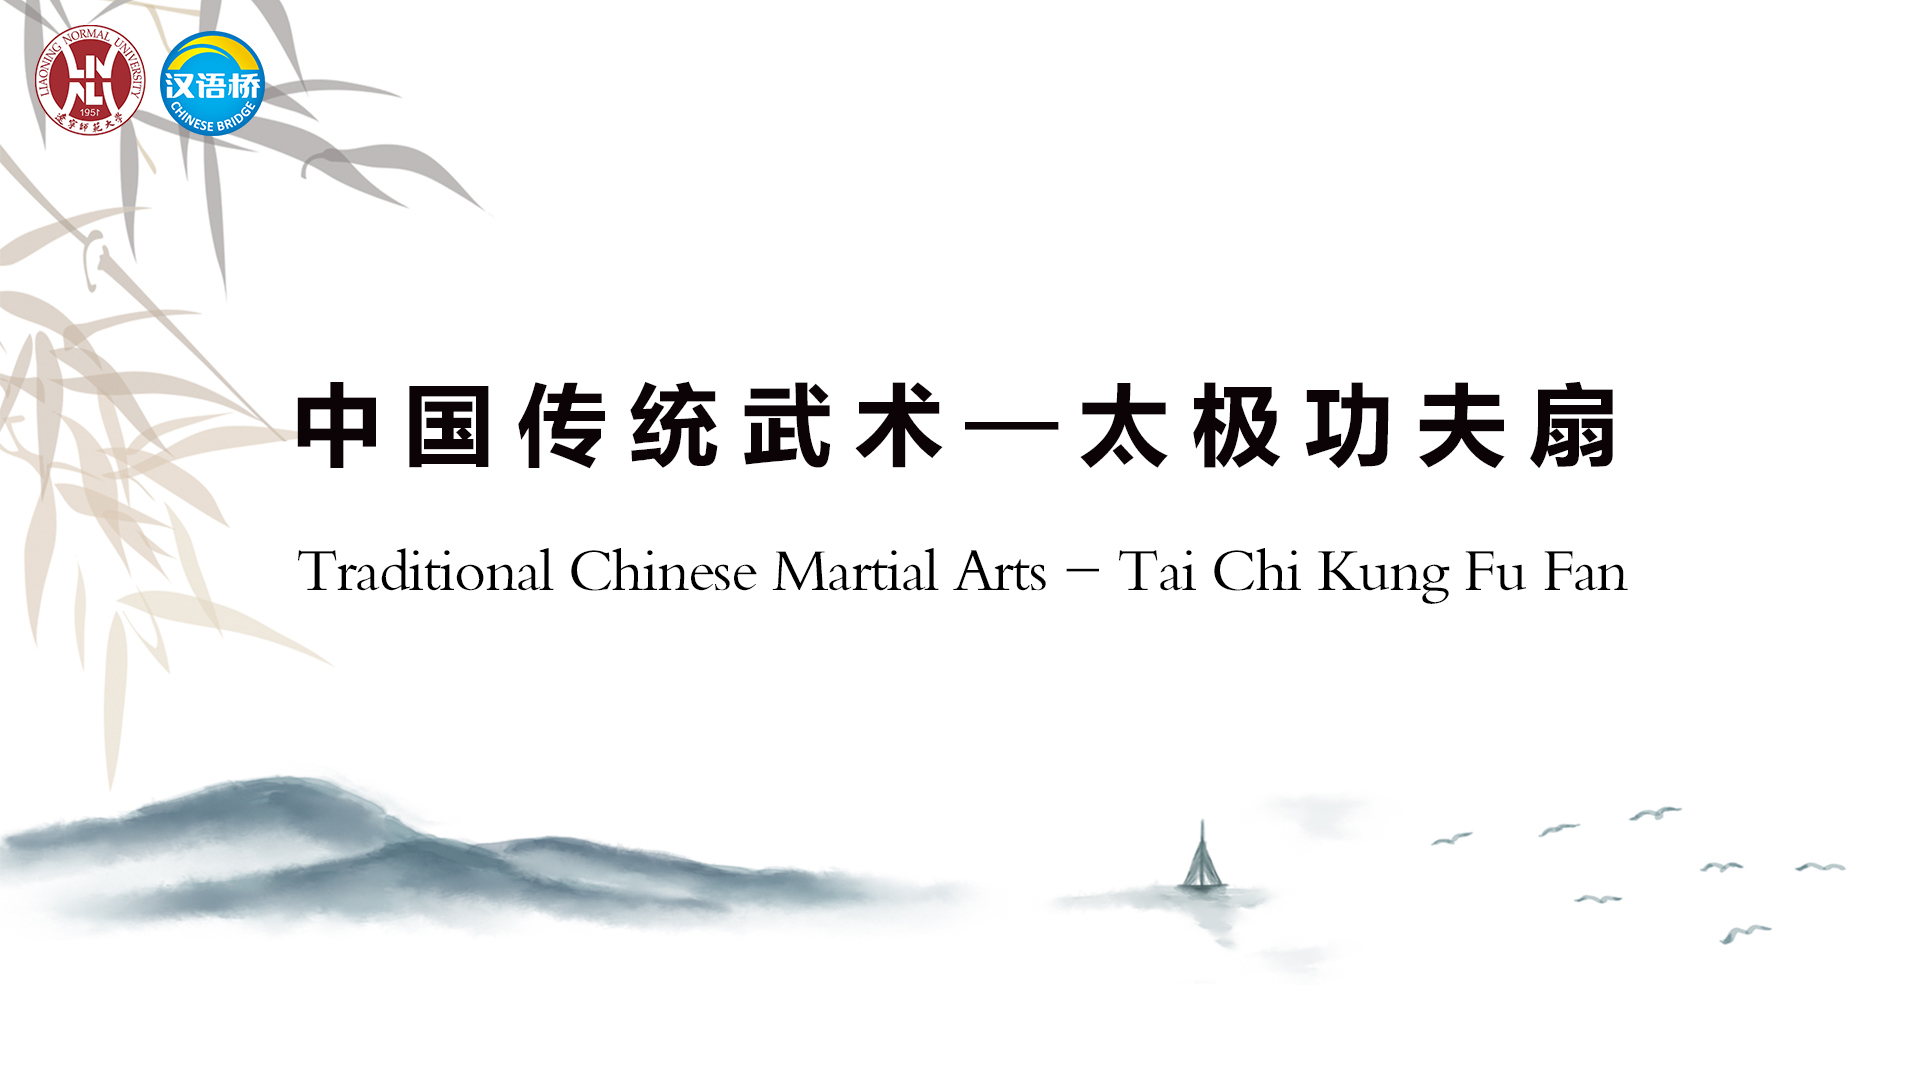 Traditional Chinese Martial Arts - Tai Chi Kung Fu Fan